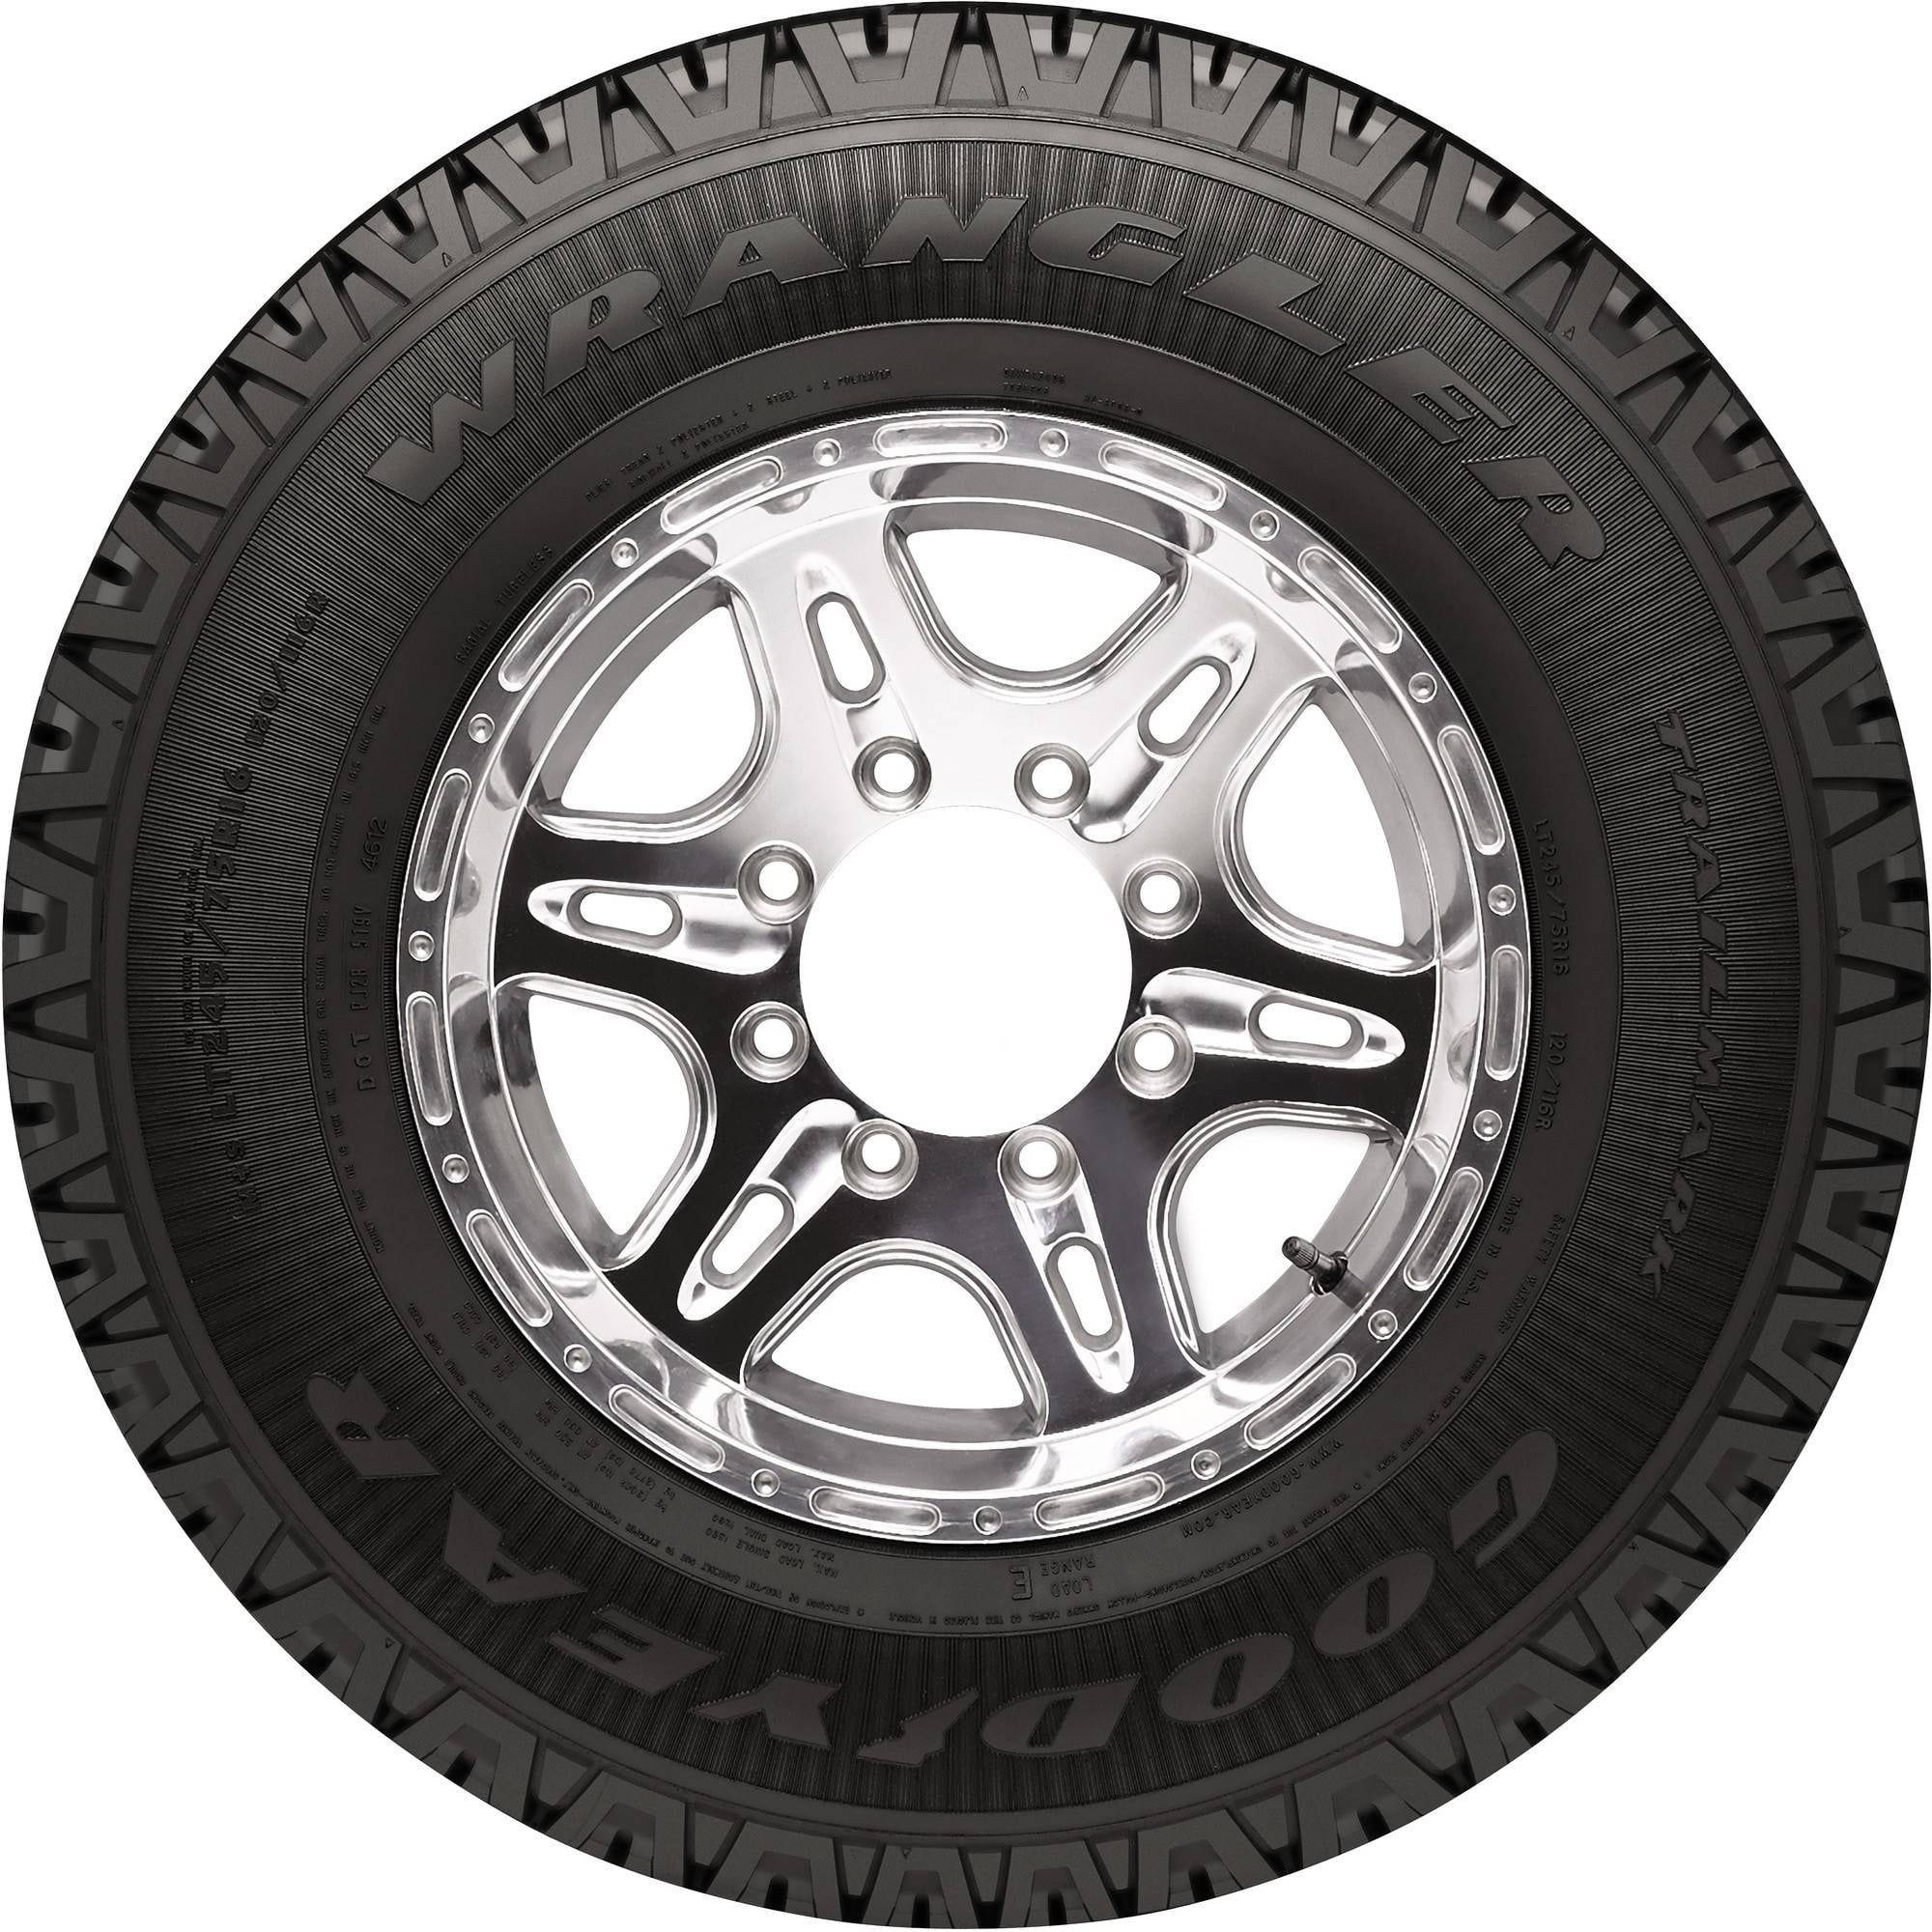 Goodyear Wrangler TrailMark All-Season P245/70R17 108S Tire 